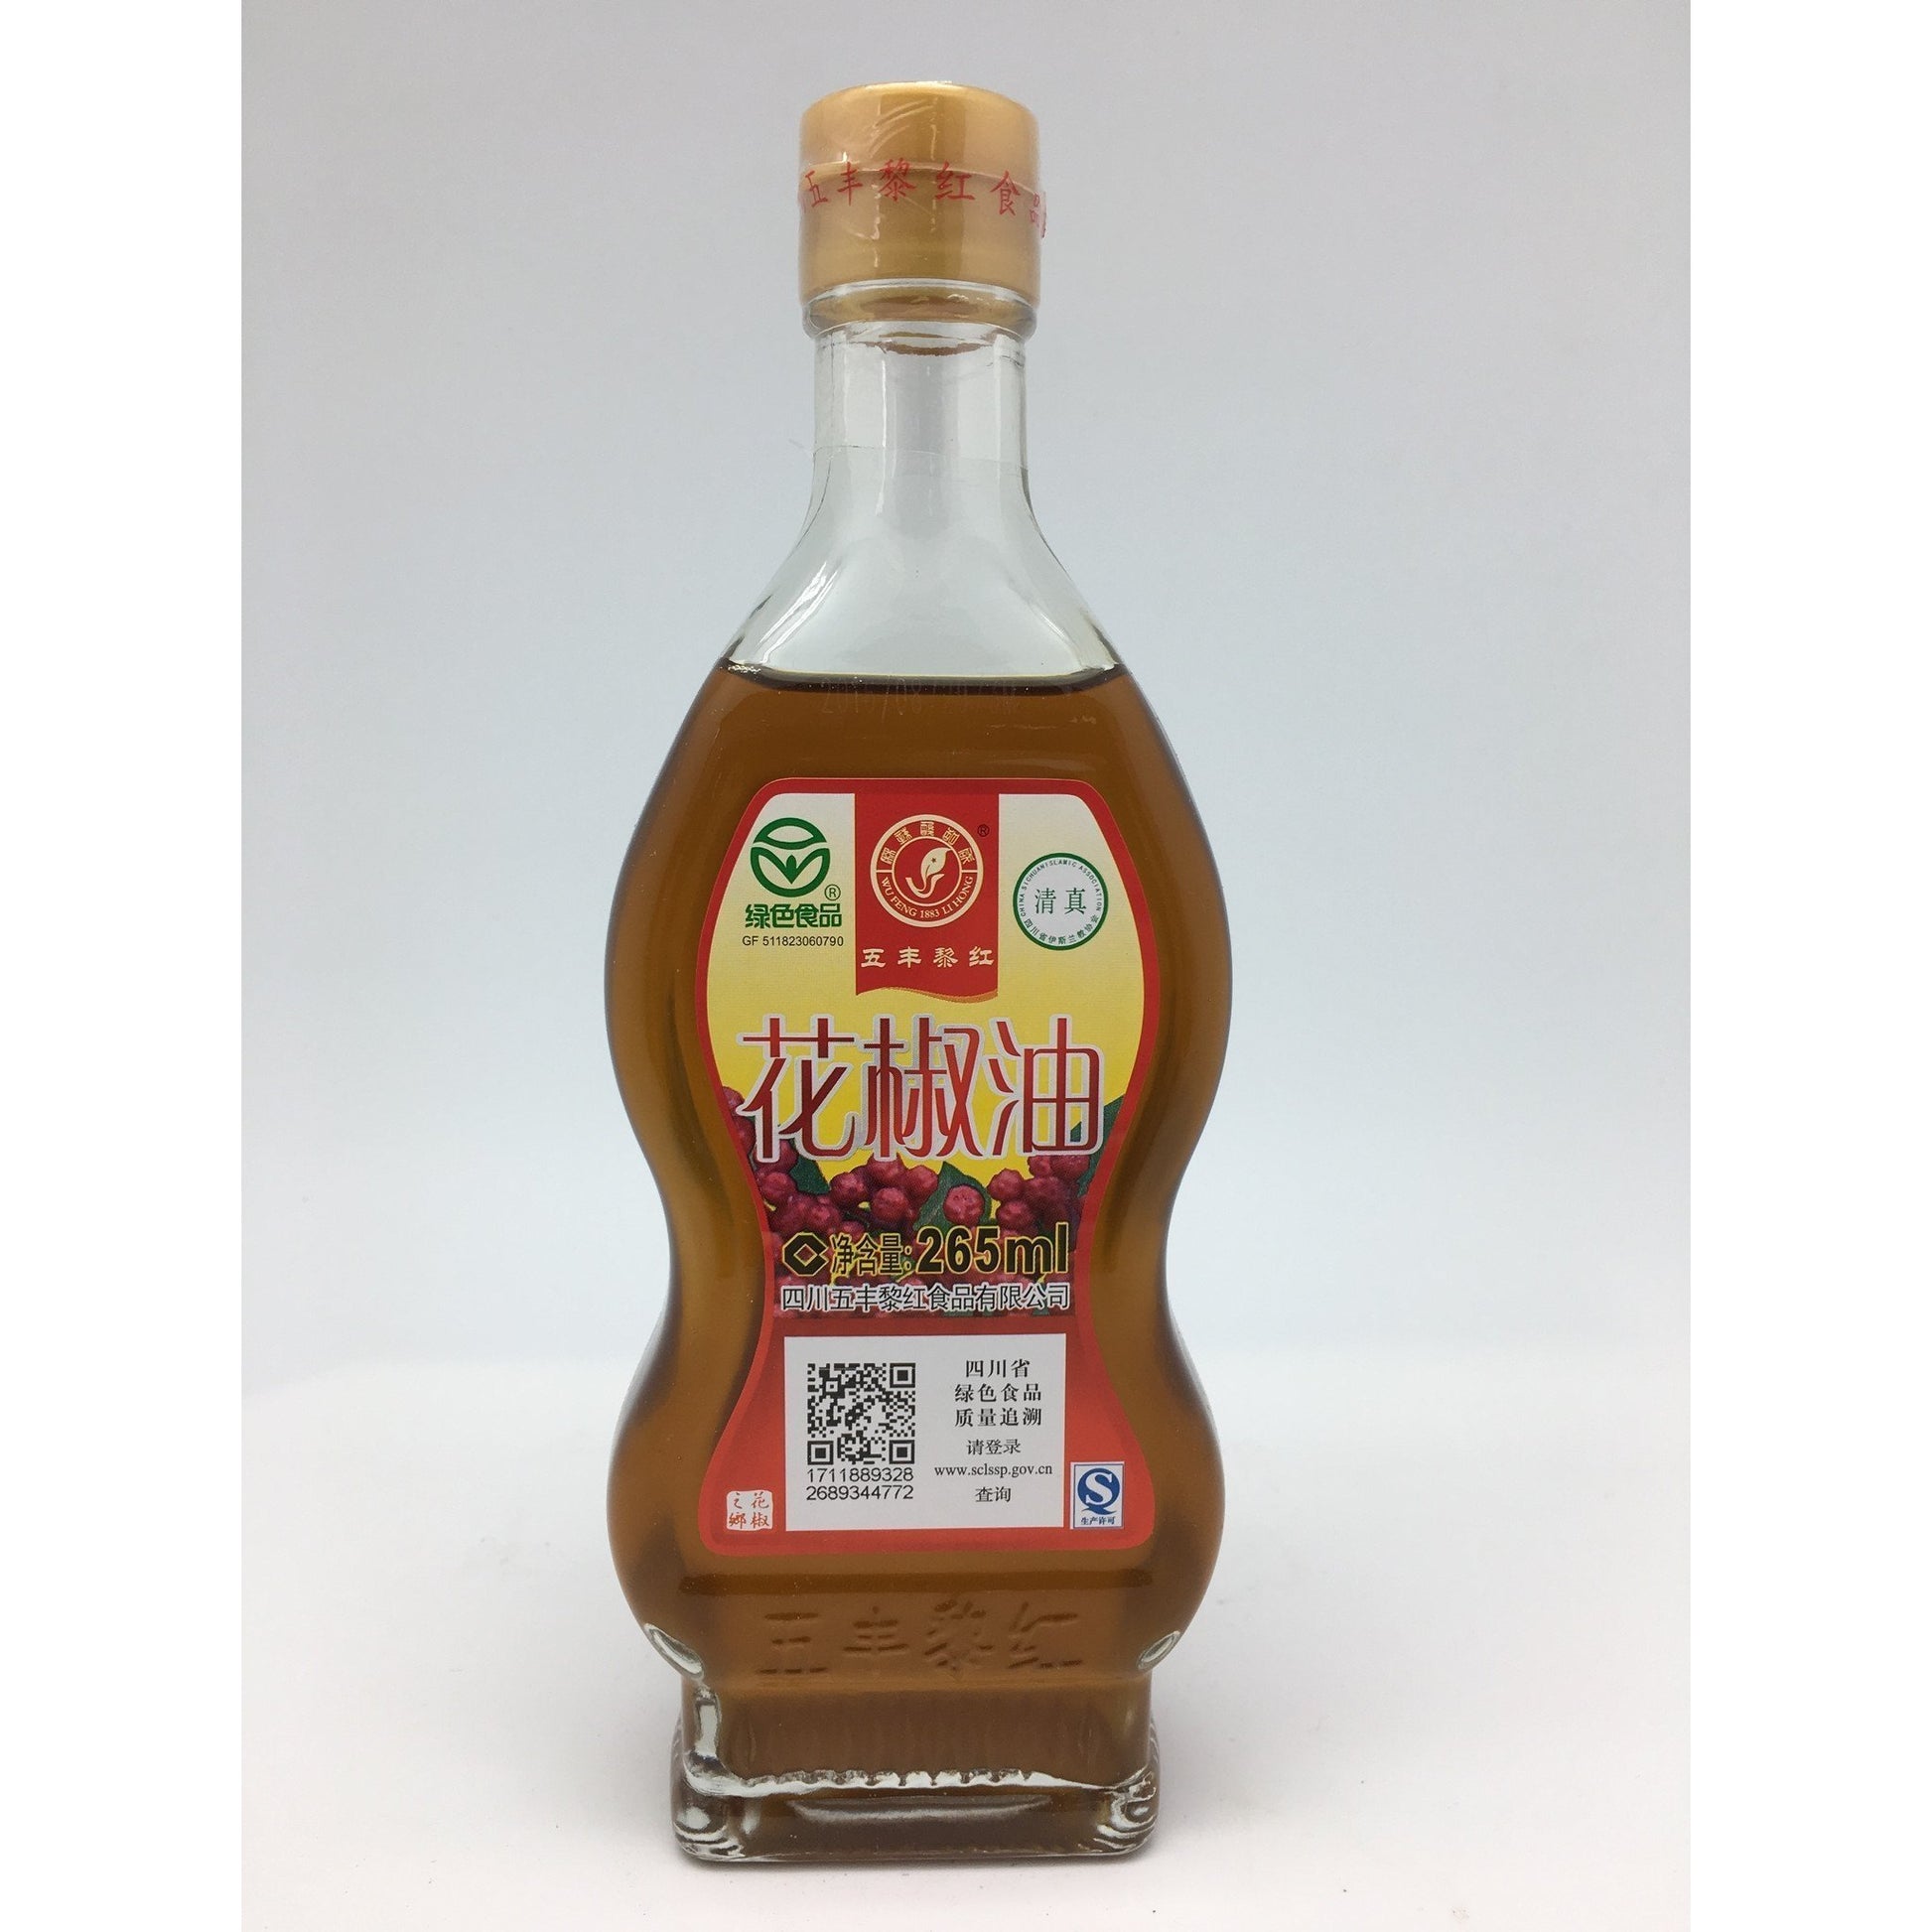 S083B Li Hong Brand - Prickly Sah Oil 265ml -  12 bot / 1ctn - New Eastland Pty Ltd - Asian food wholesalers